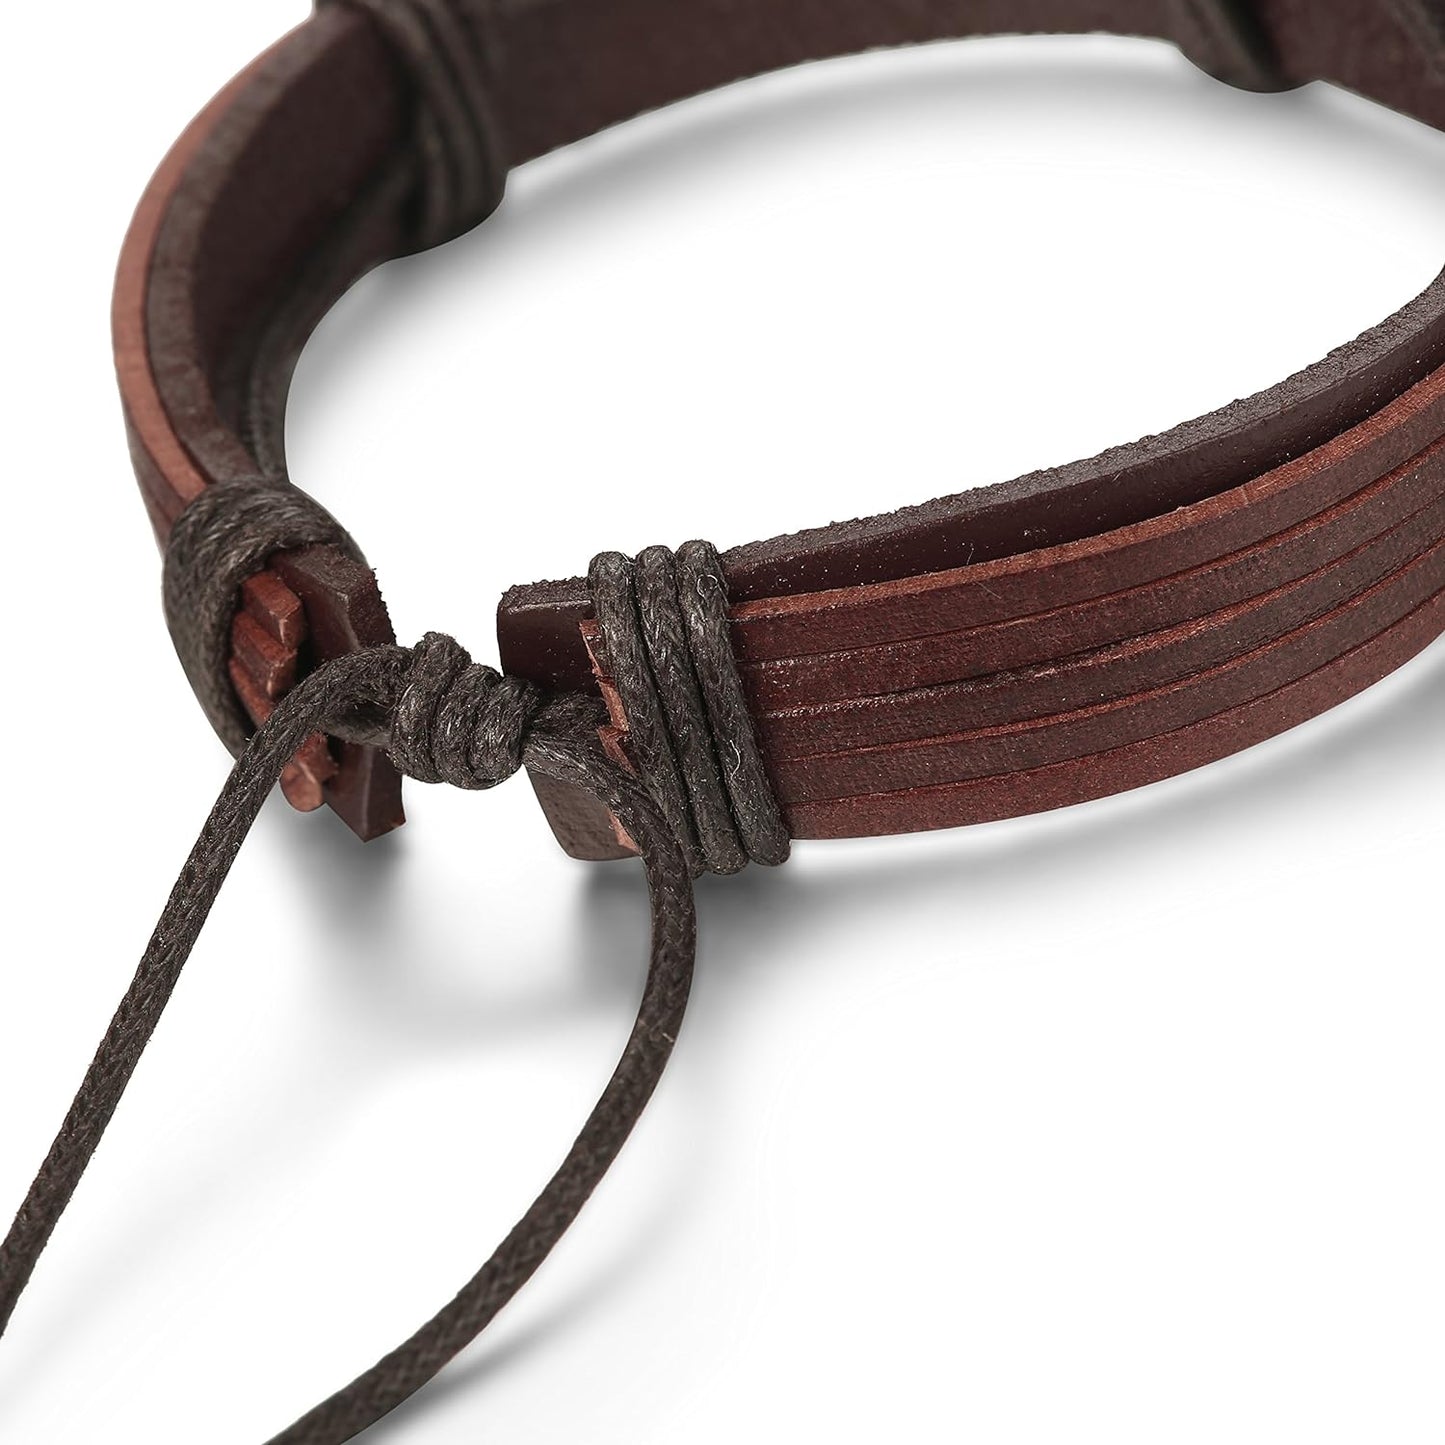 Jstyle 12Pcs Braided Leather Bracelet for Men Women Cuff Wrap Bracelet Adjustable Black and Brown (A:12Pcs)